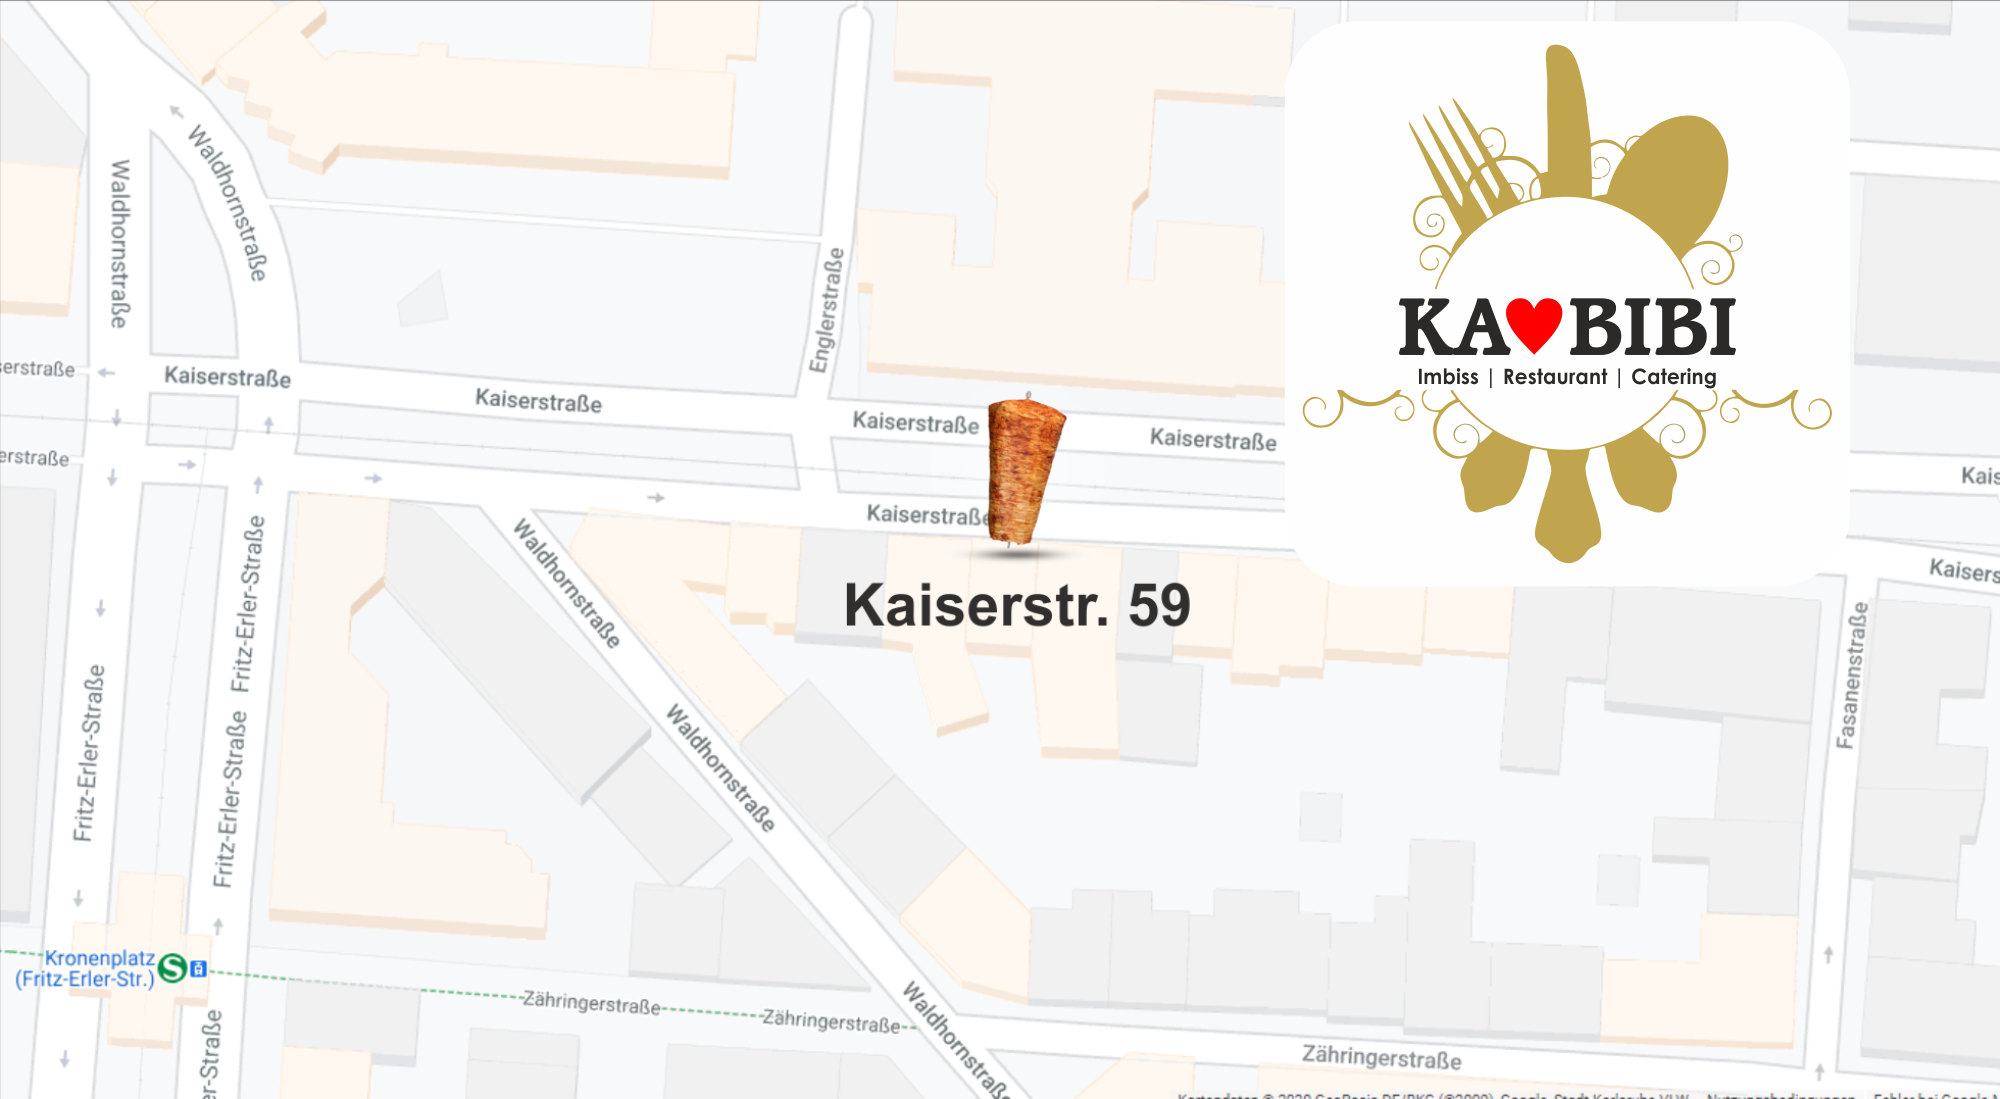 Anfahrt Kabibi Schawarma und Falafel Karlsruhe